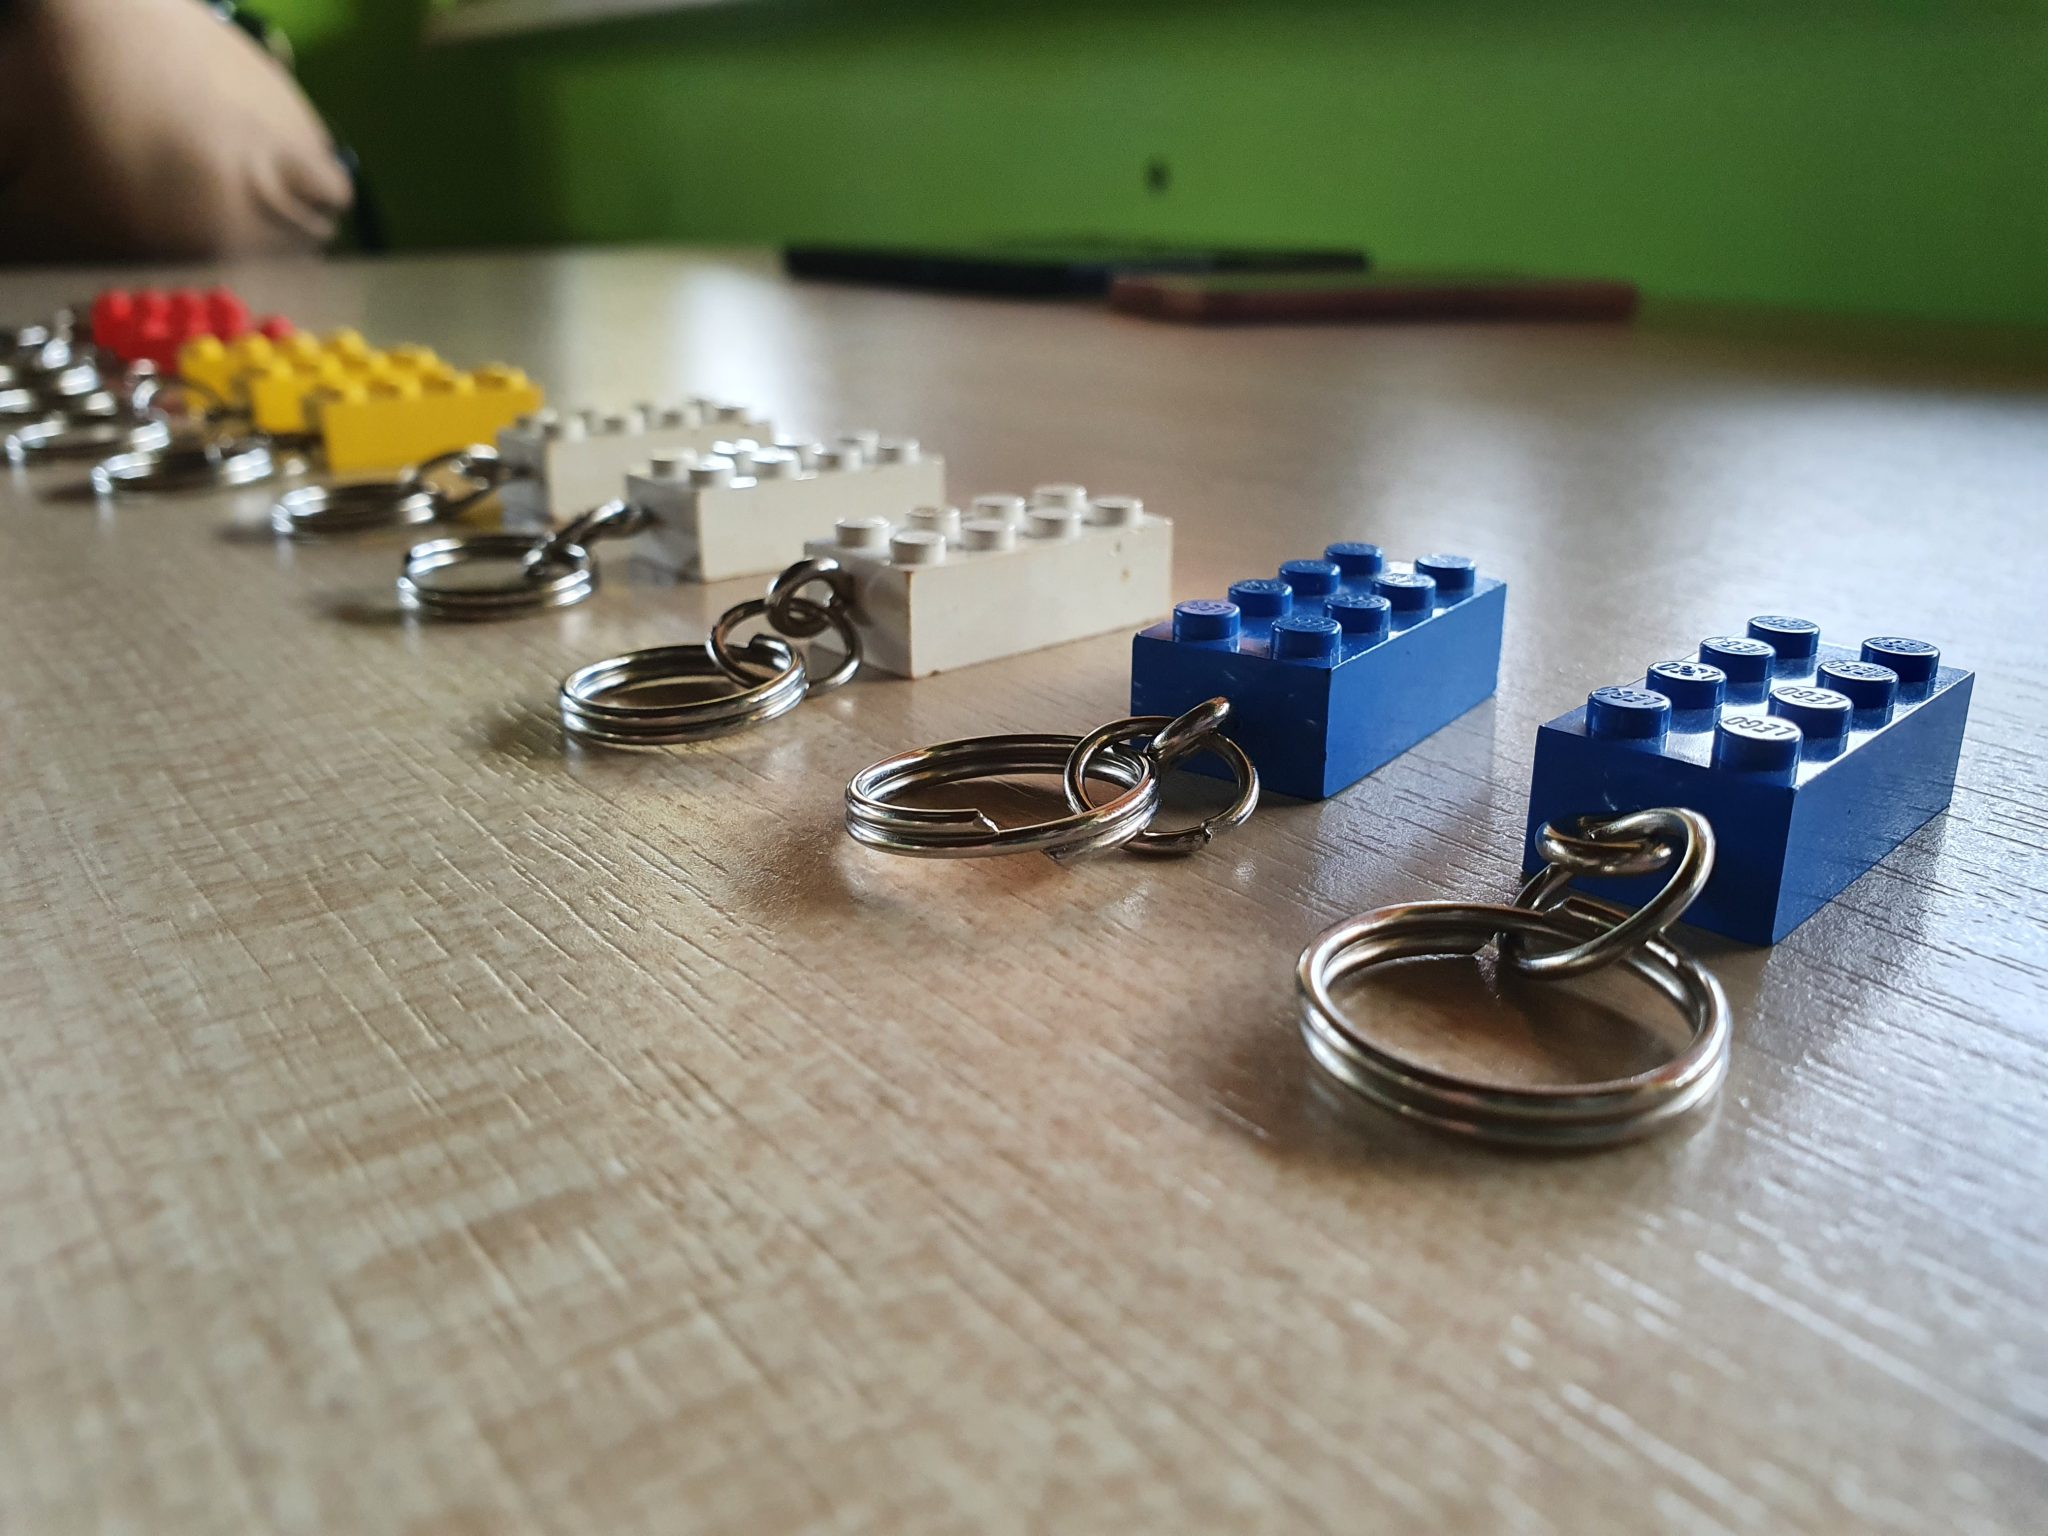 Lego keychains